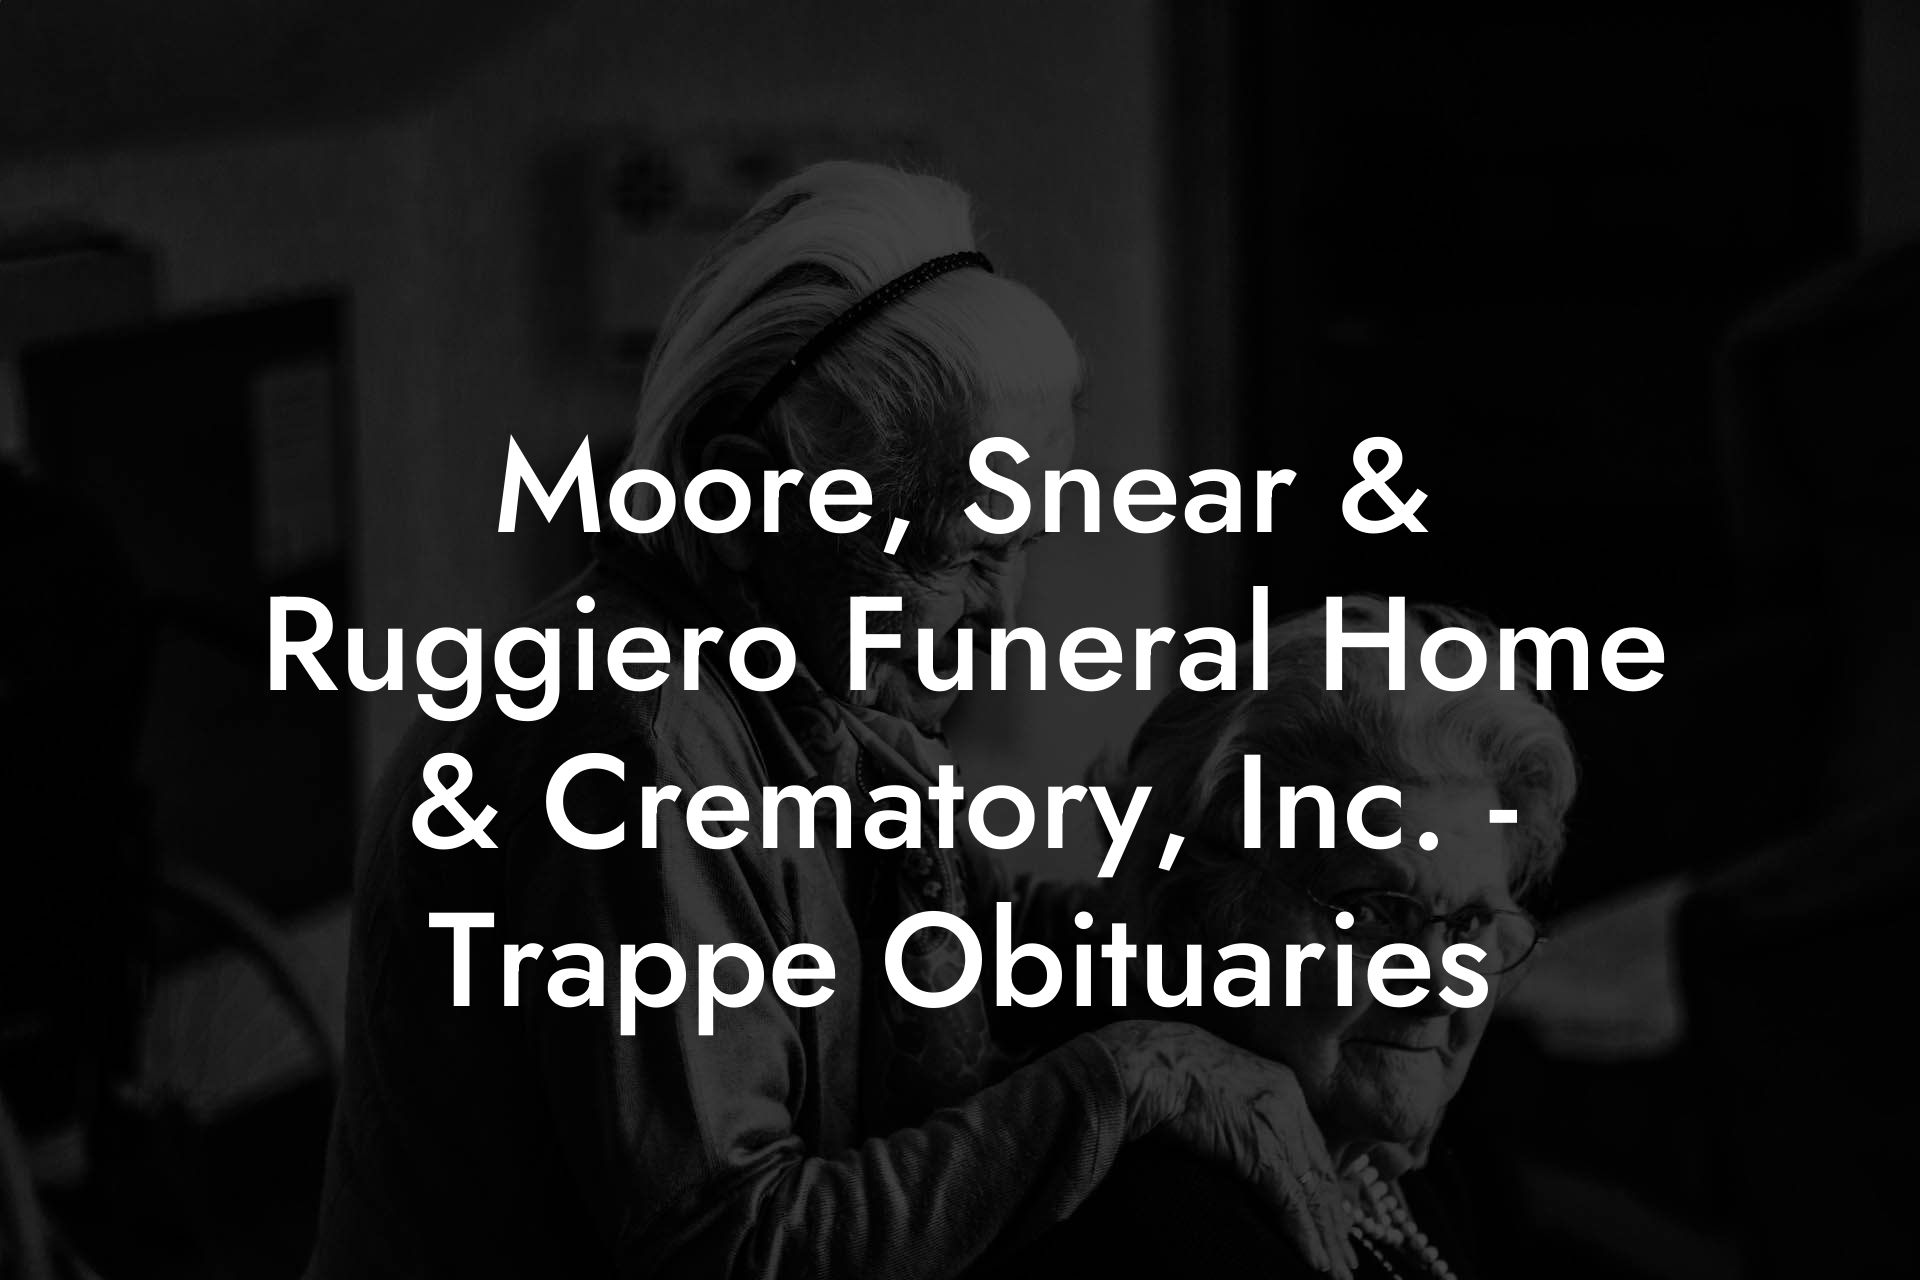 Moore, Snear & Ruggiero Funeral Home & Crematory, Inc. - Trappe Obituaries